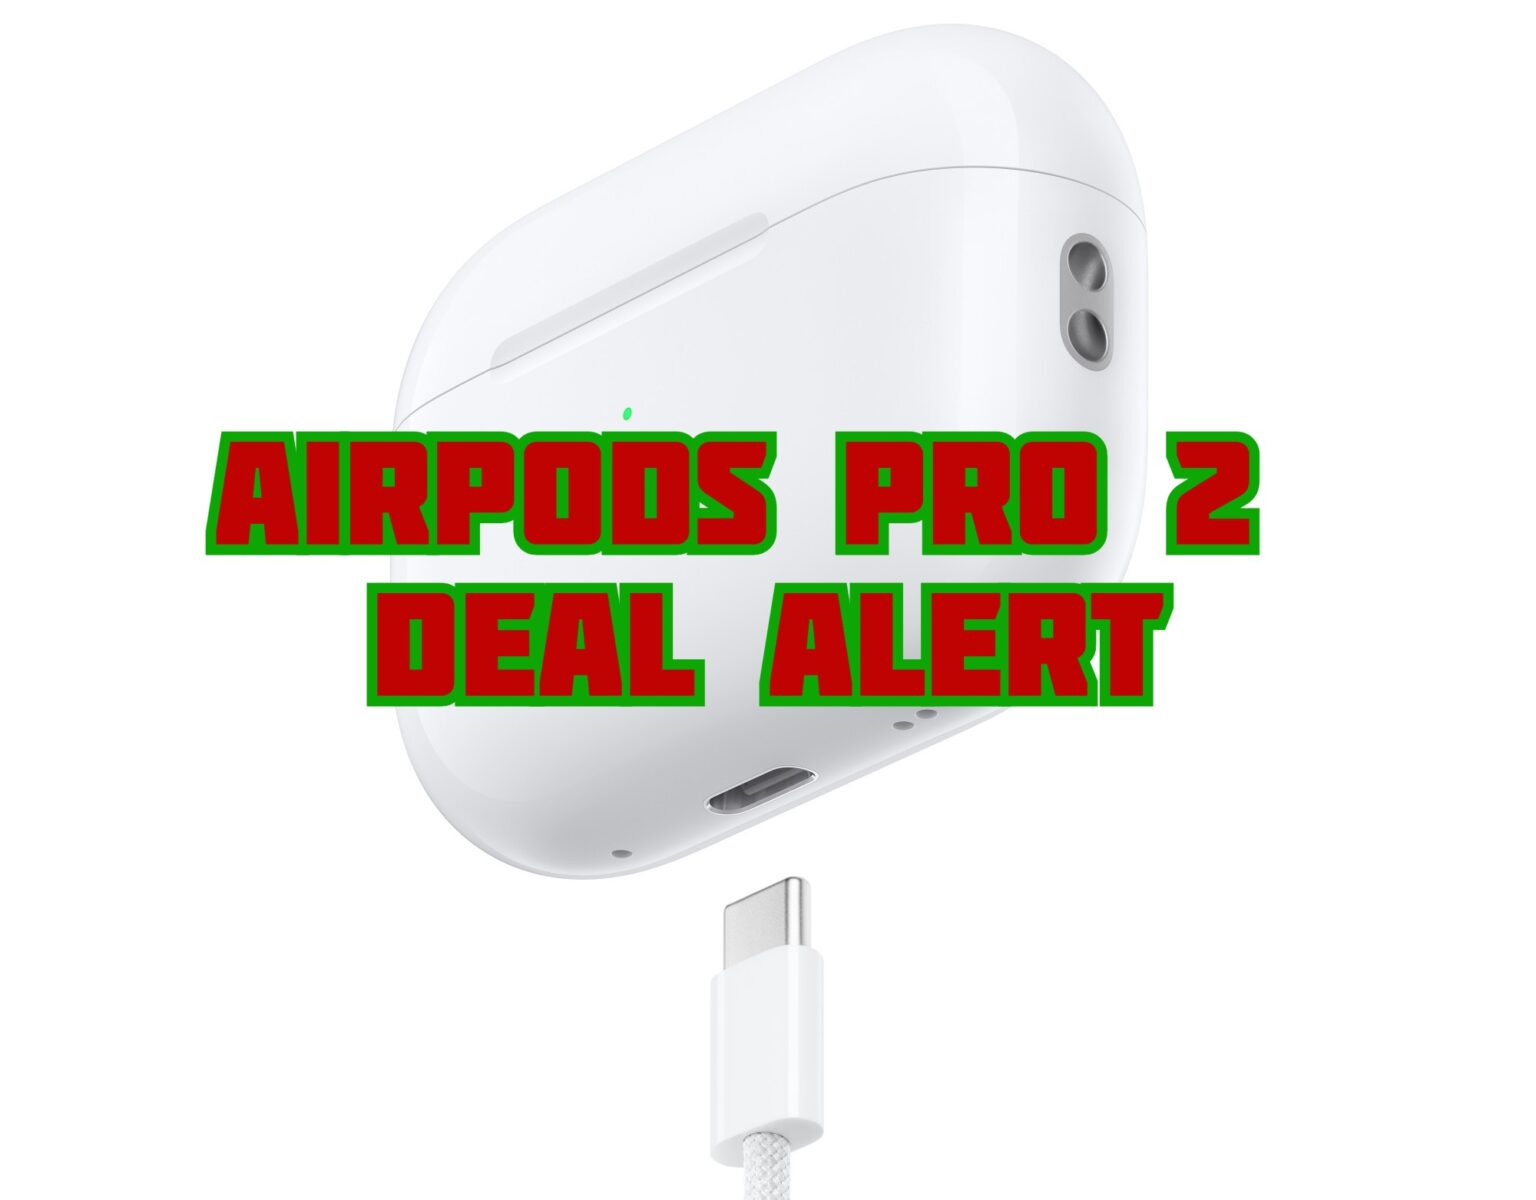 Deal alert: AirPods Pro 2 sale